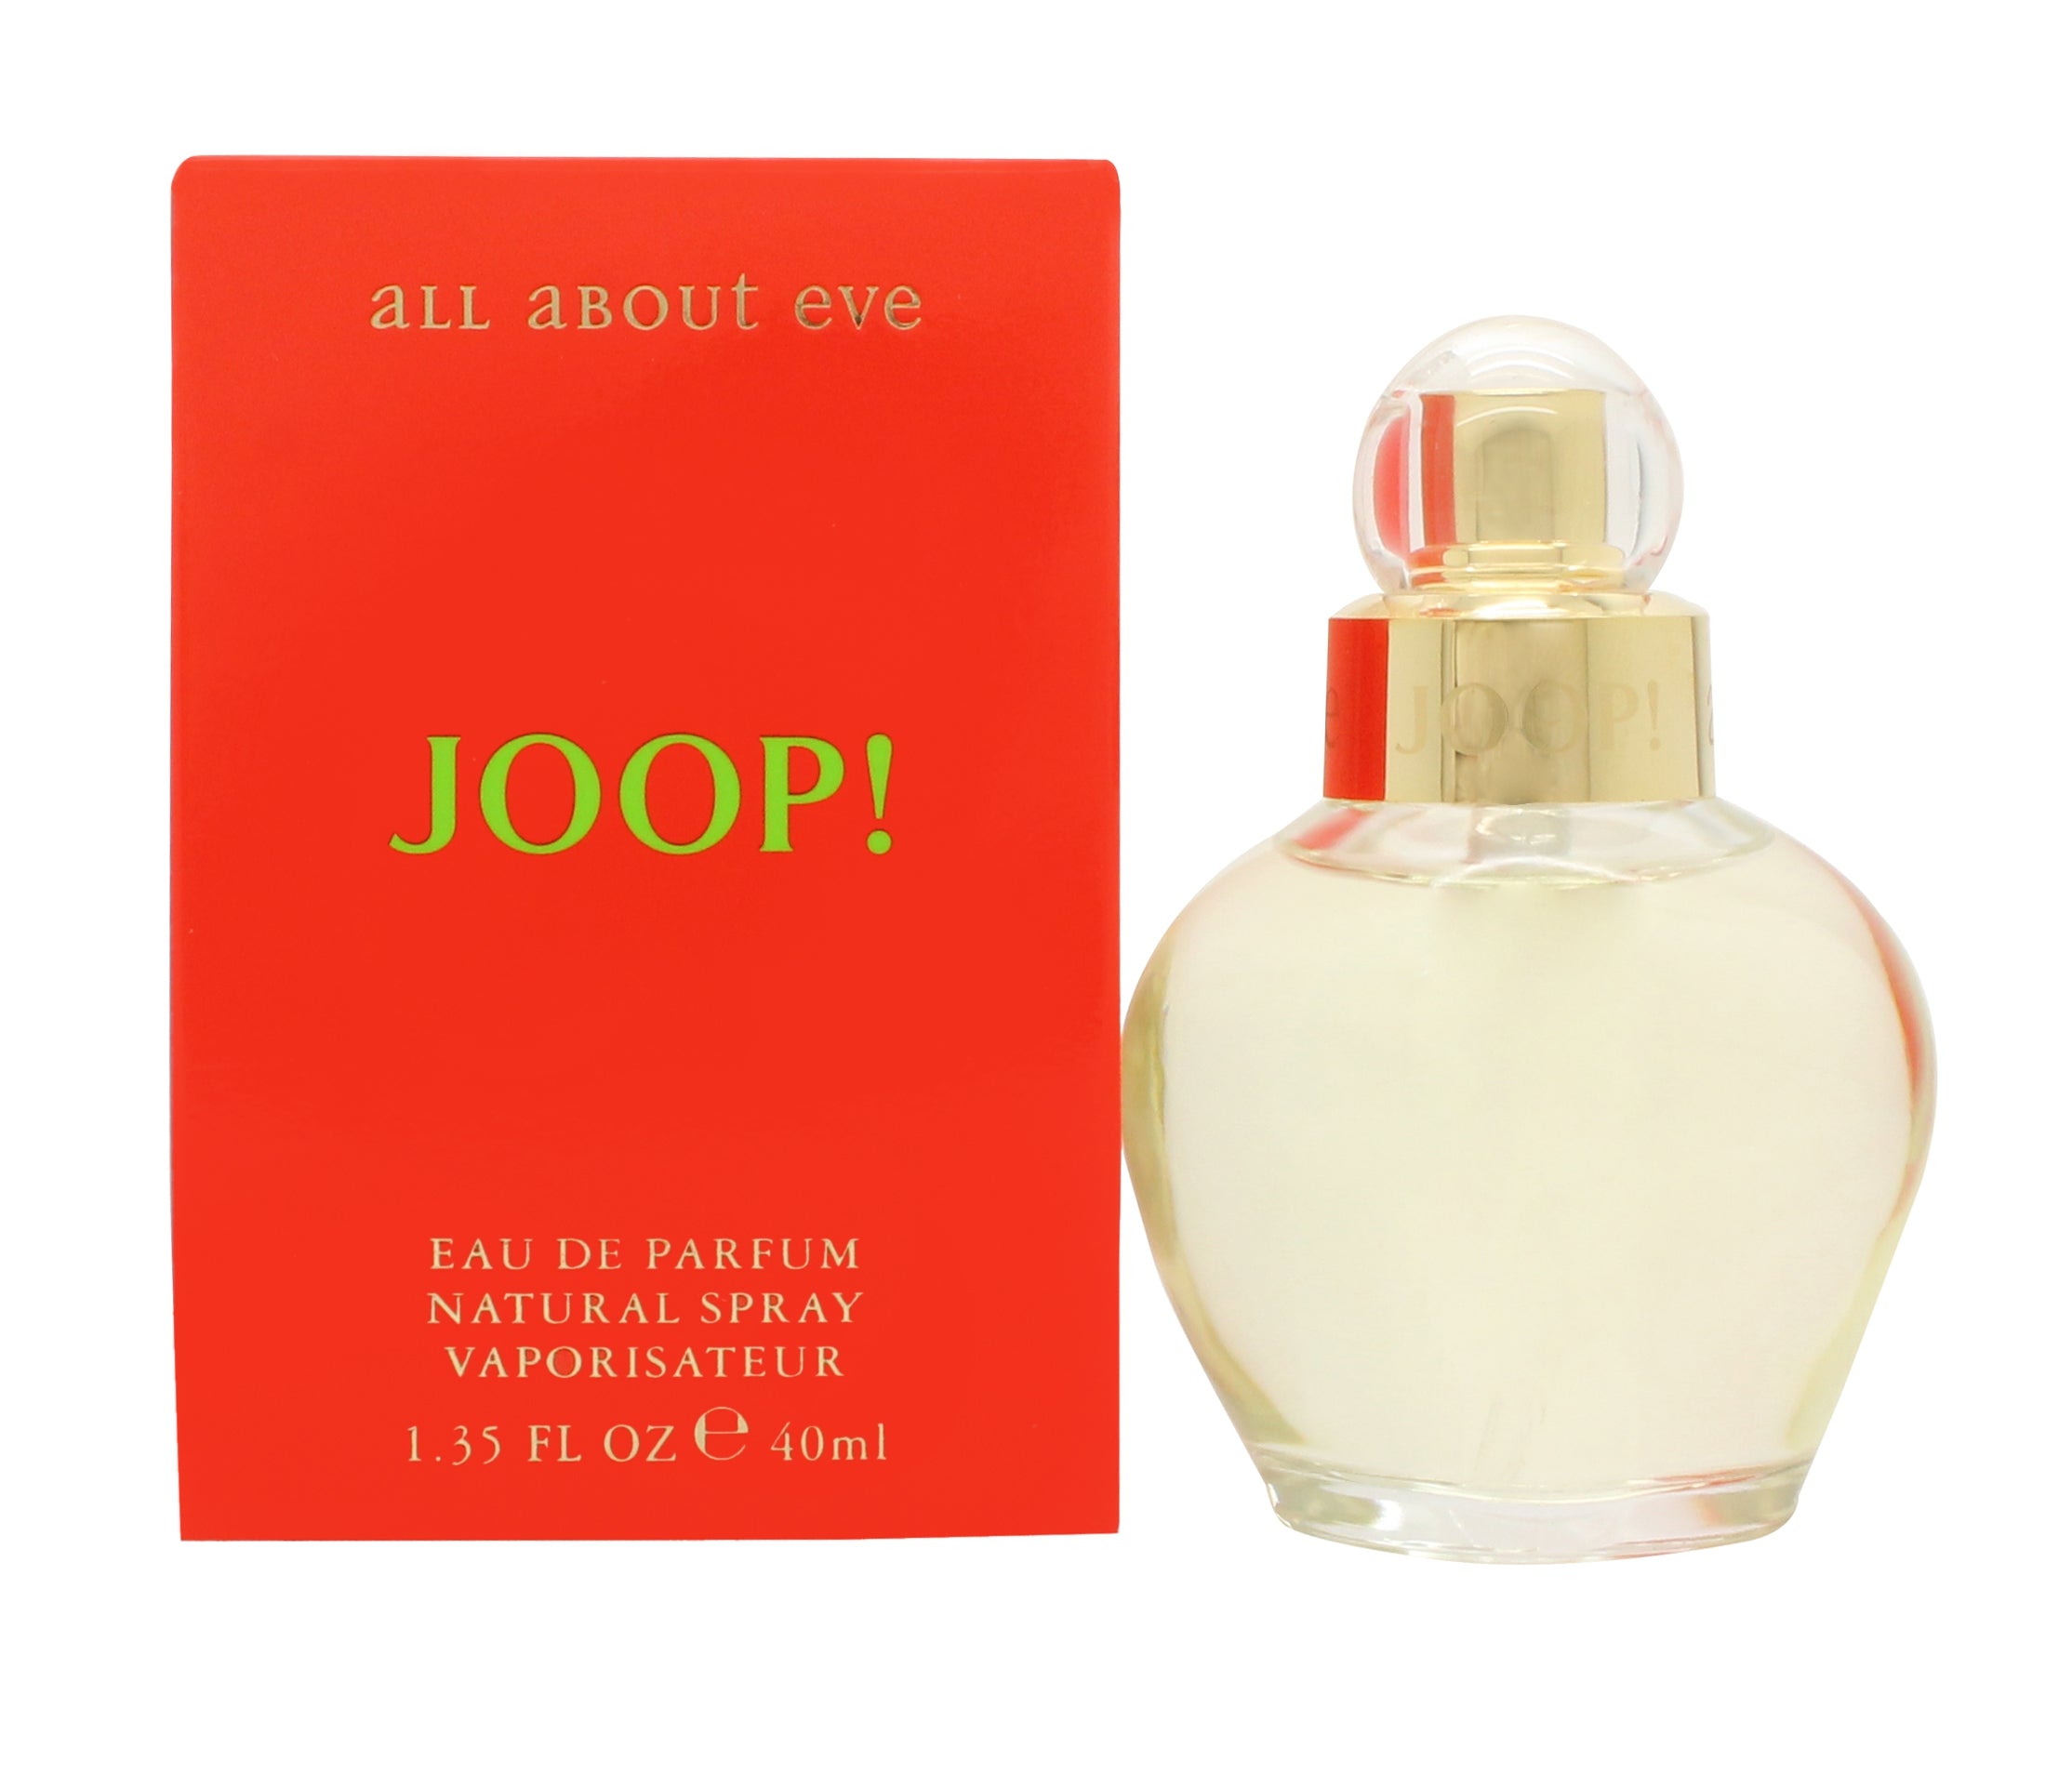 View Joop All About Eve Eau de Parfum 40ml Spray information